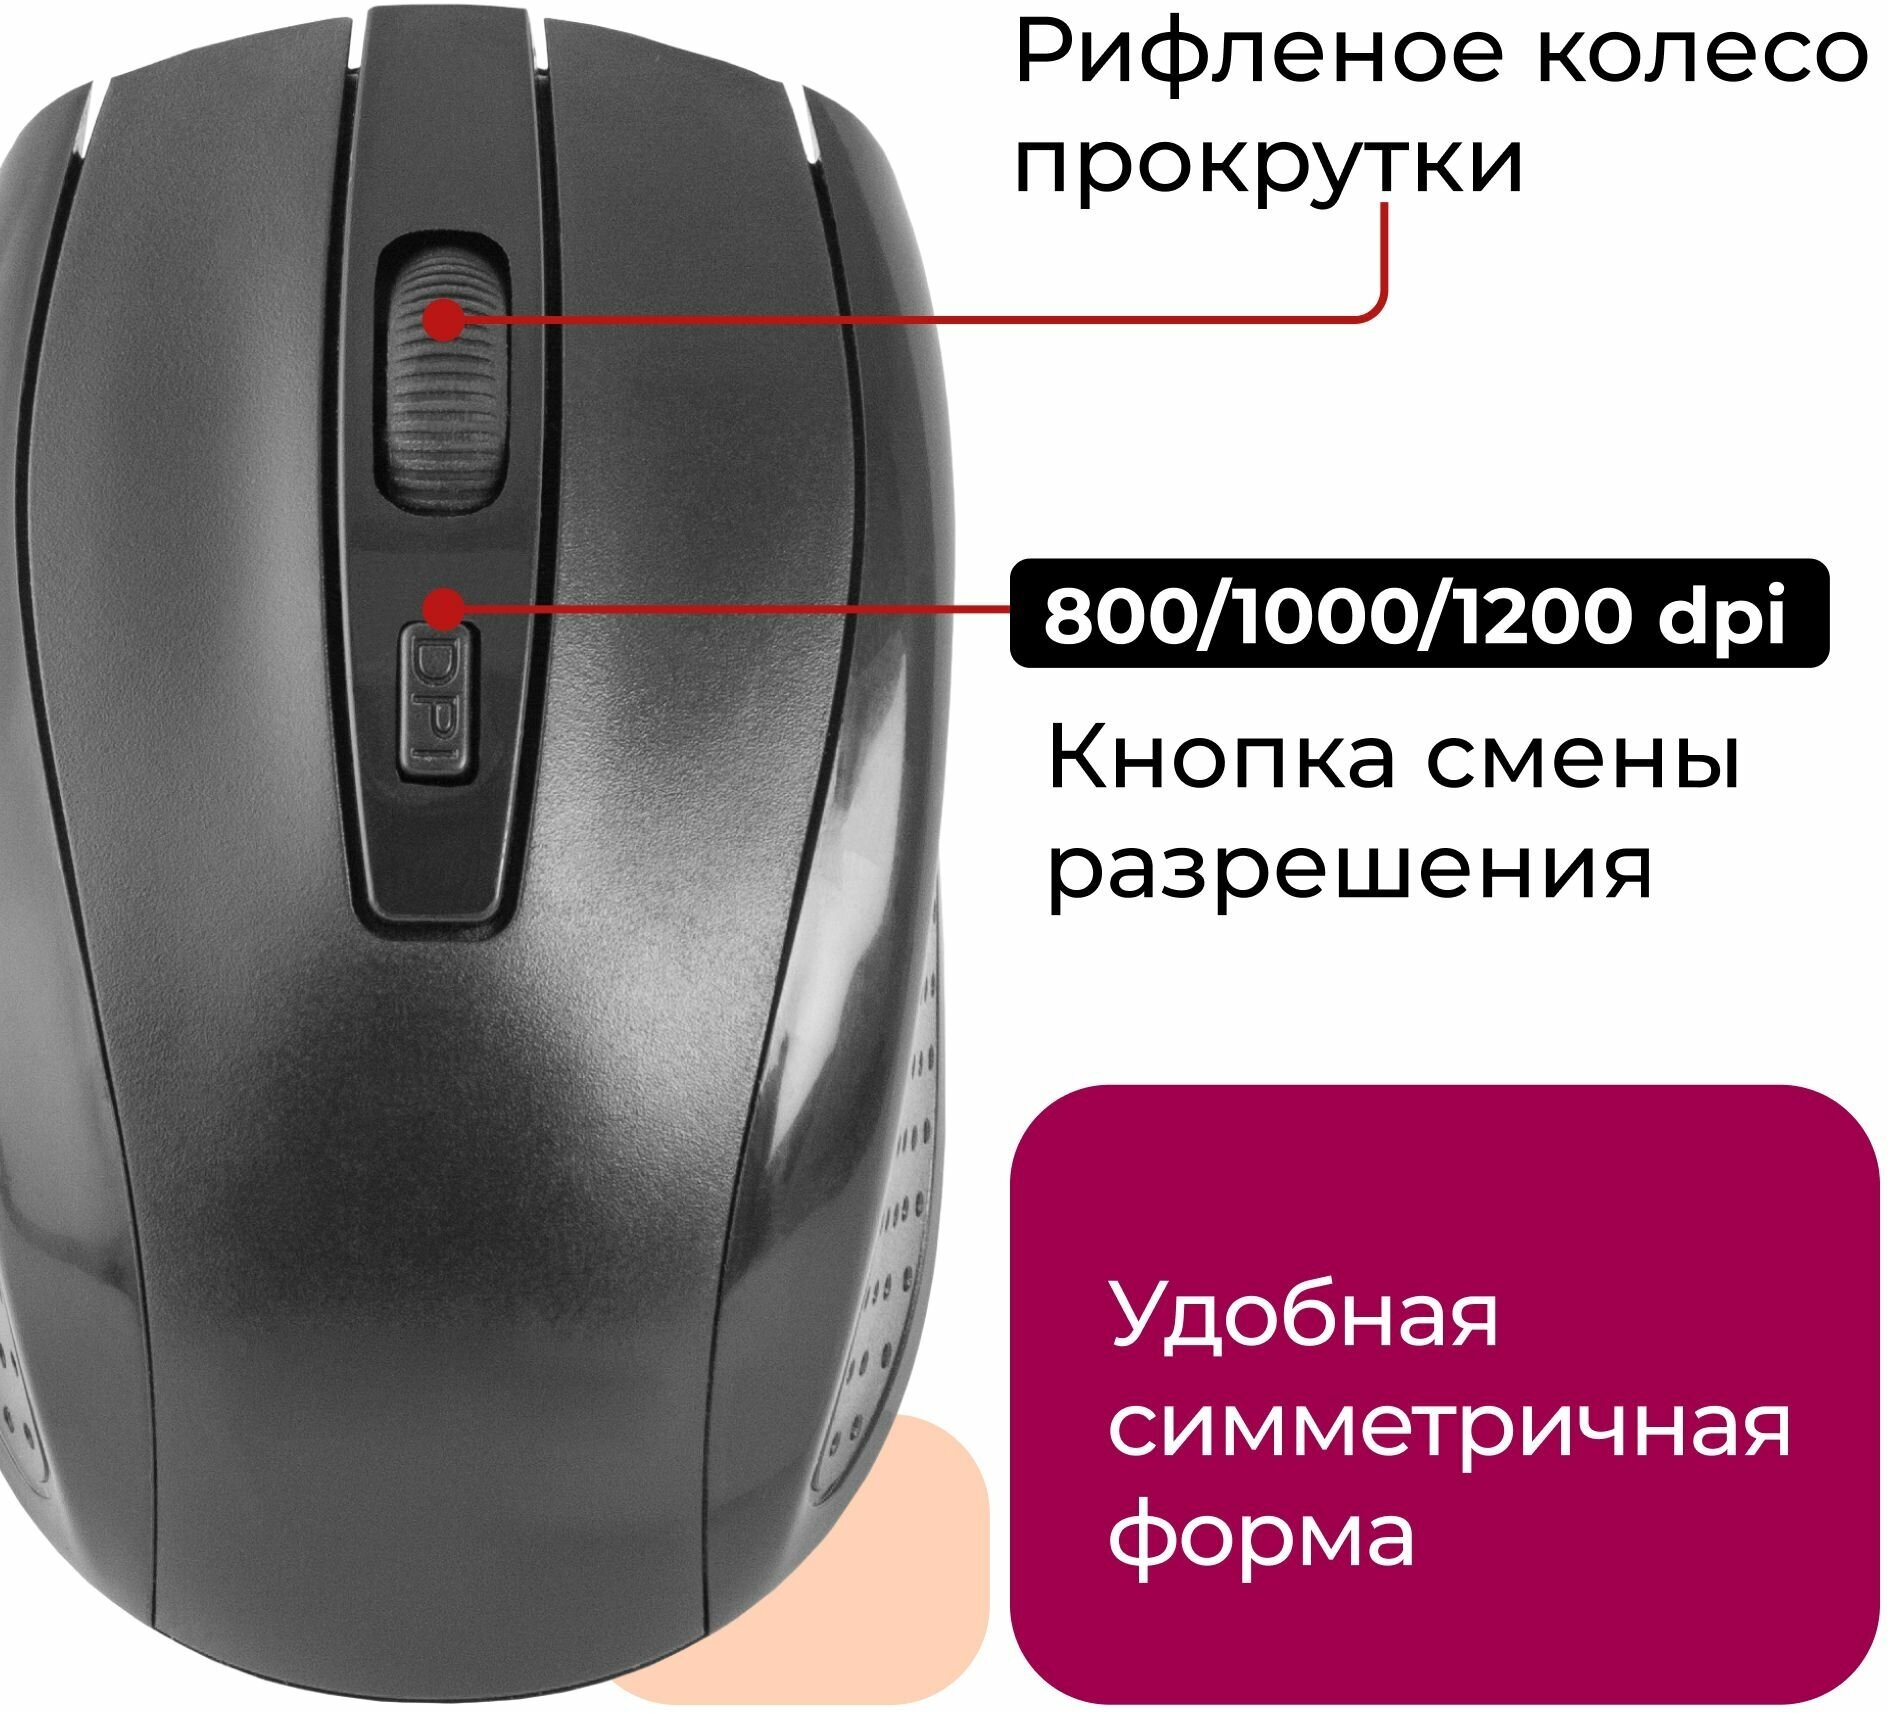 Комплект клавиатура + мышь Defender C-915 RU